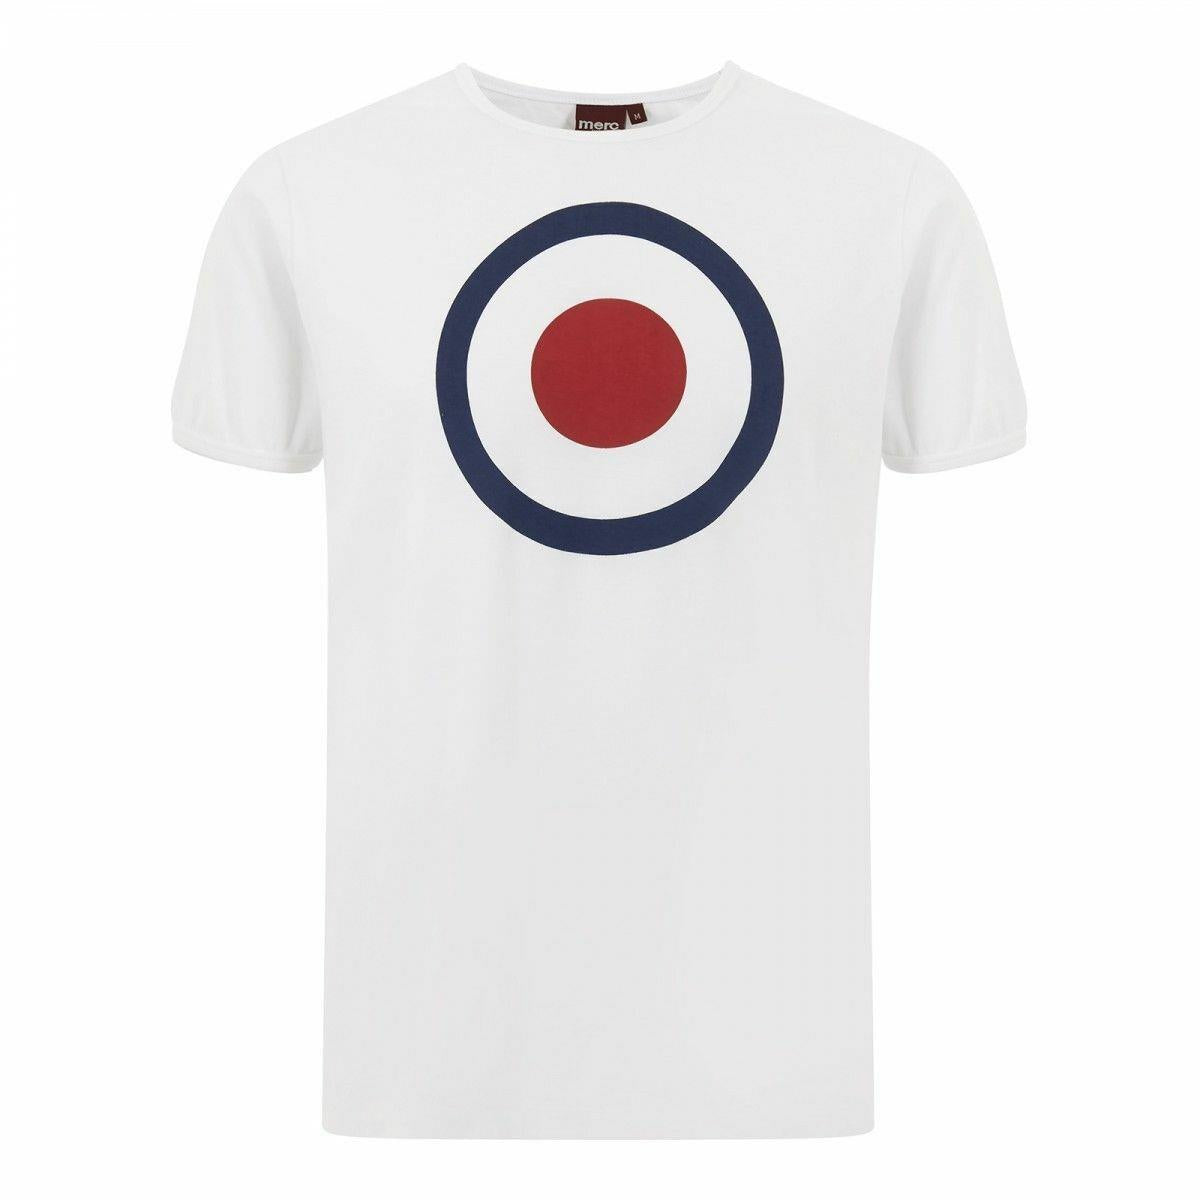 MERC Ticket white 100% cotton short sleeve retro RAF roundel MoD T-shirt size XXL